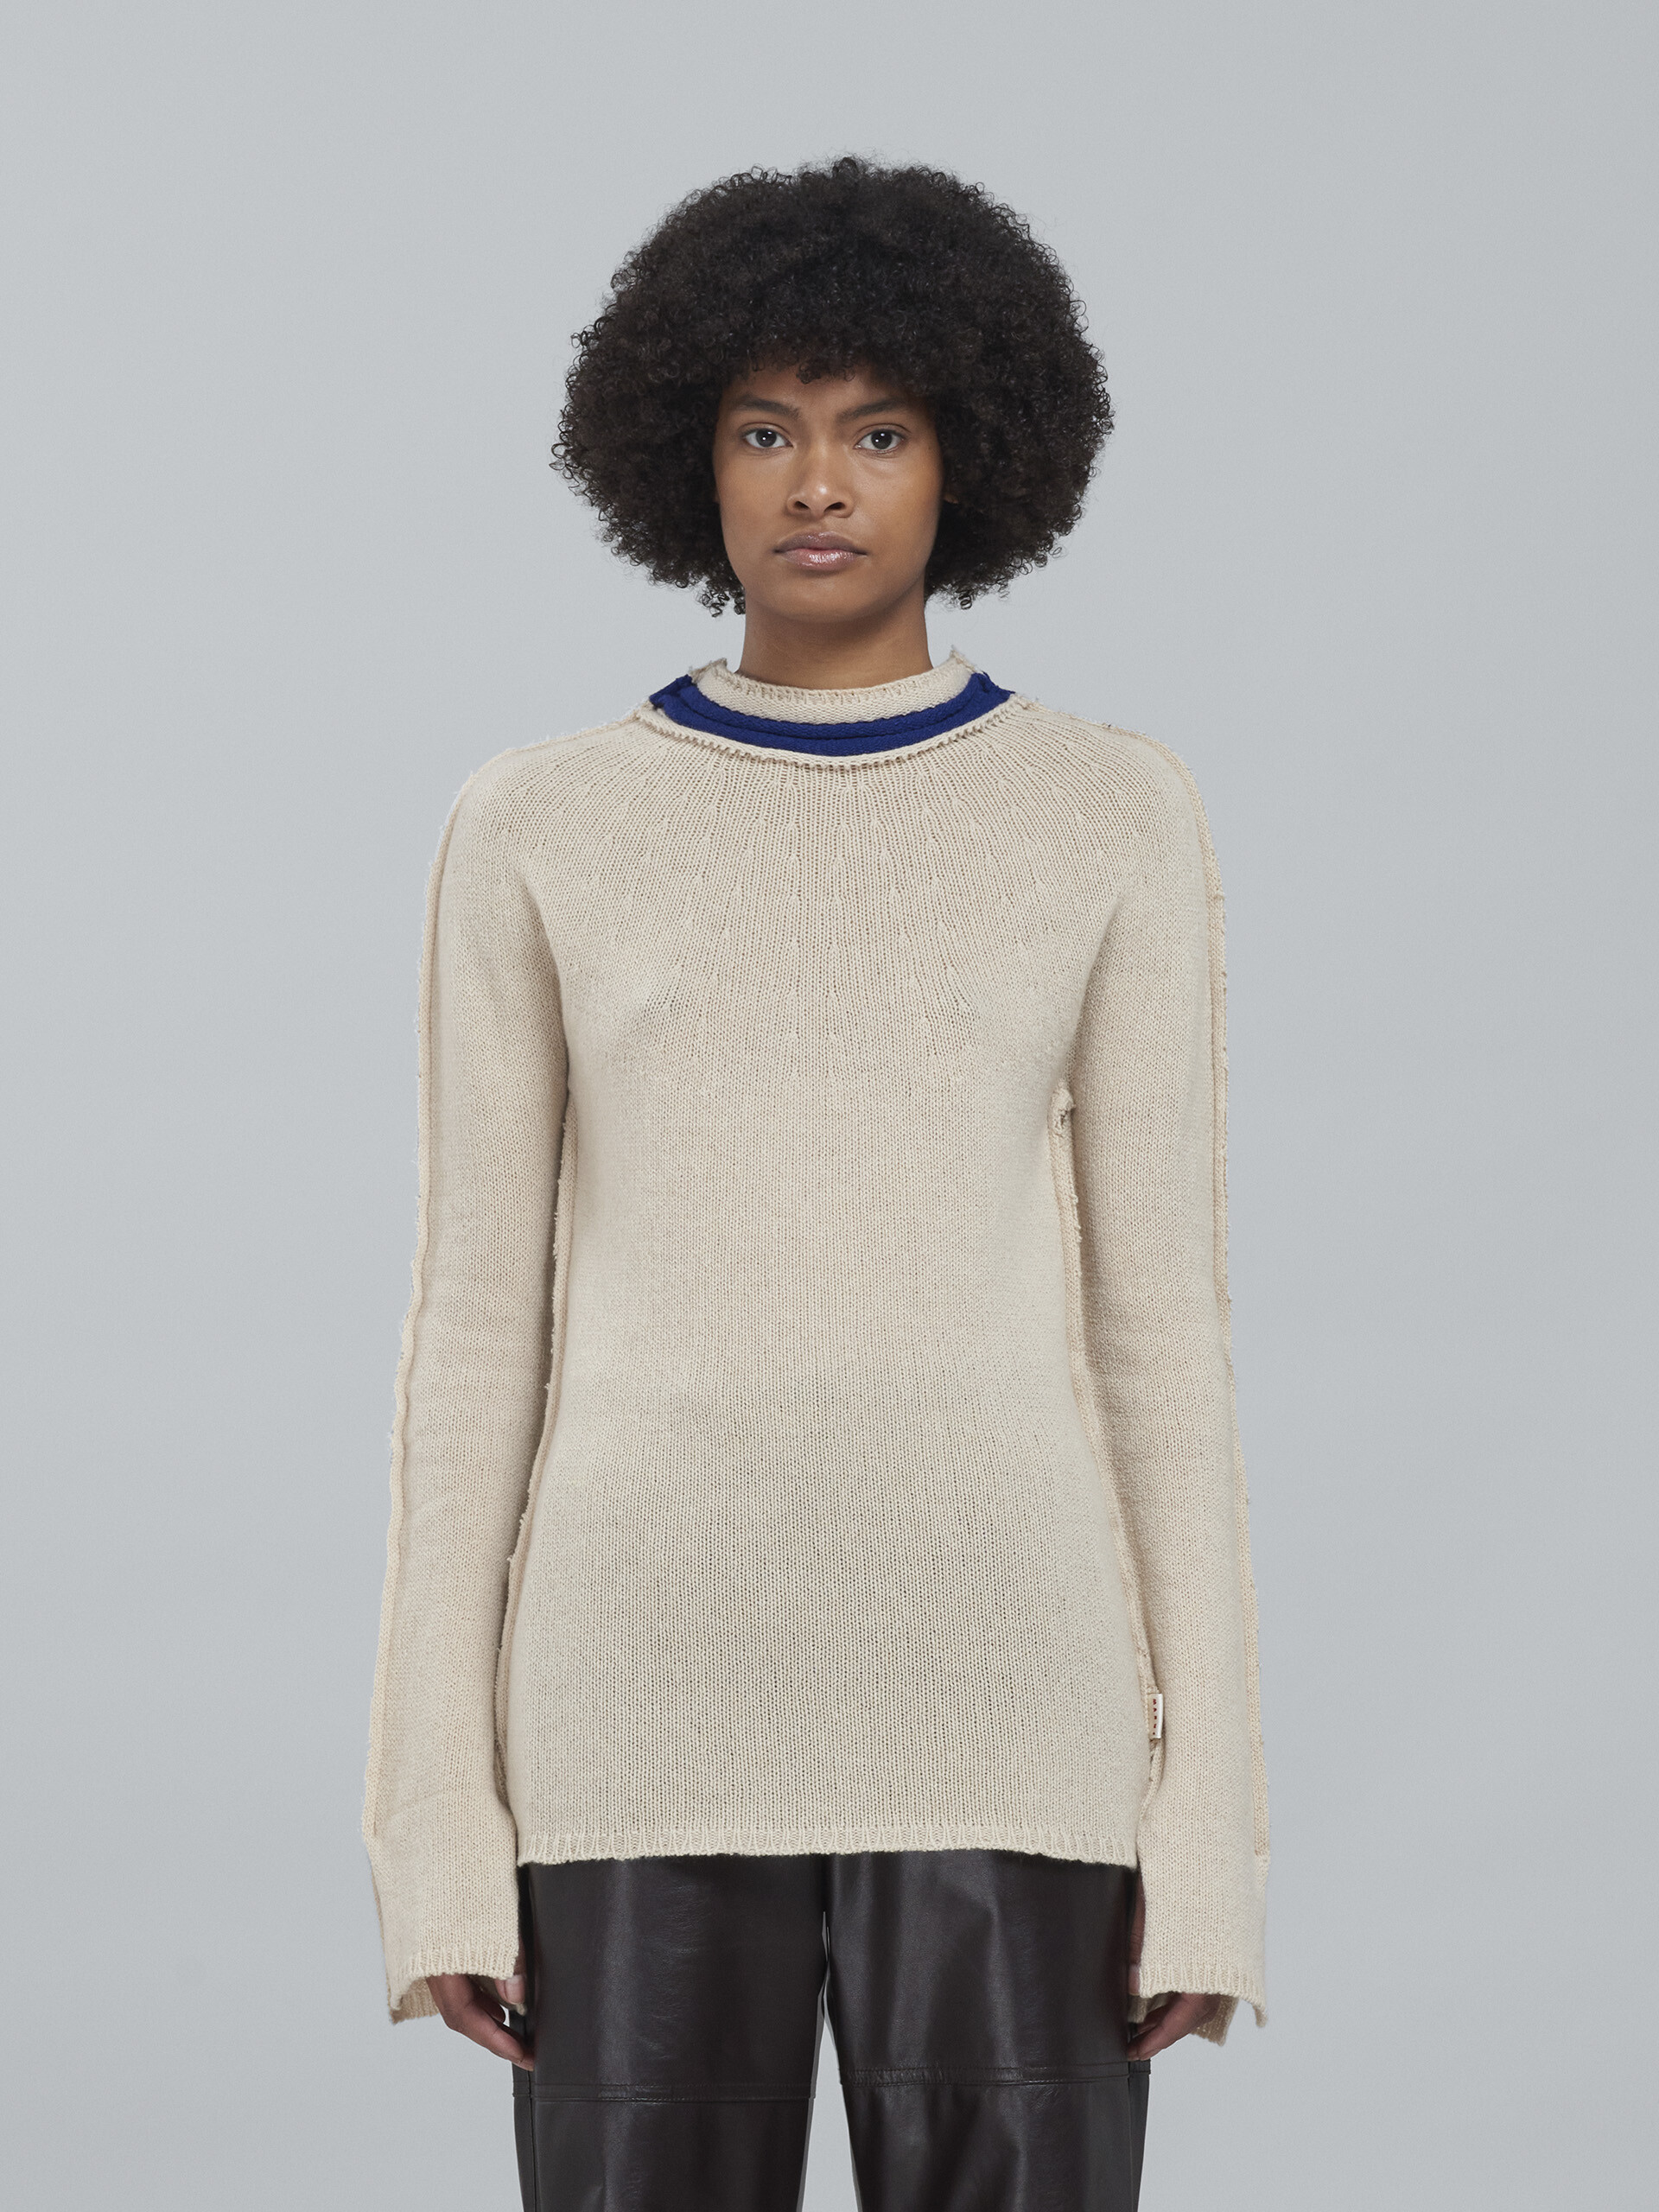 Cashwool long crewneck sweater - Pullovers - Image 2